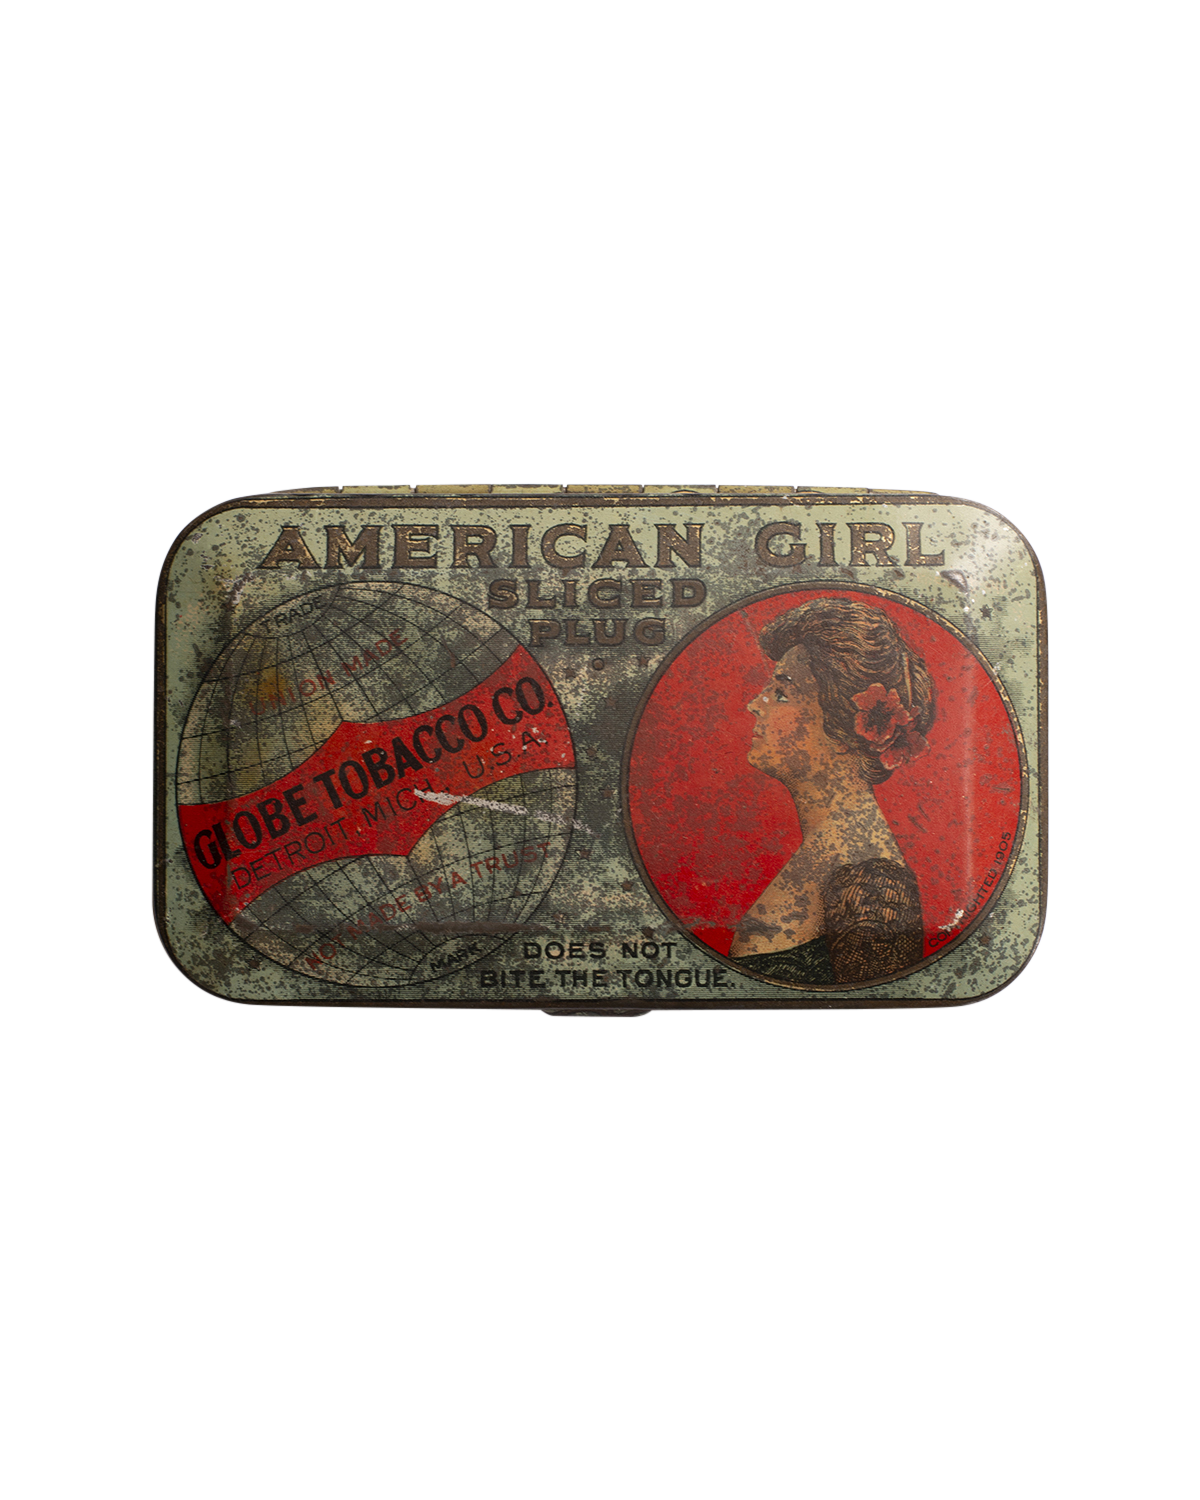 American Girl Sliced Plug Tobacco Tin